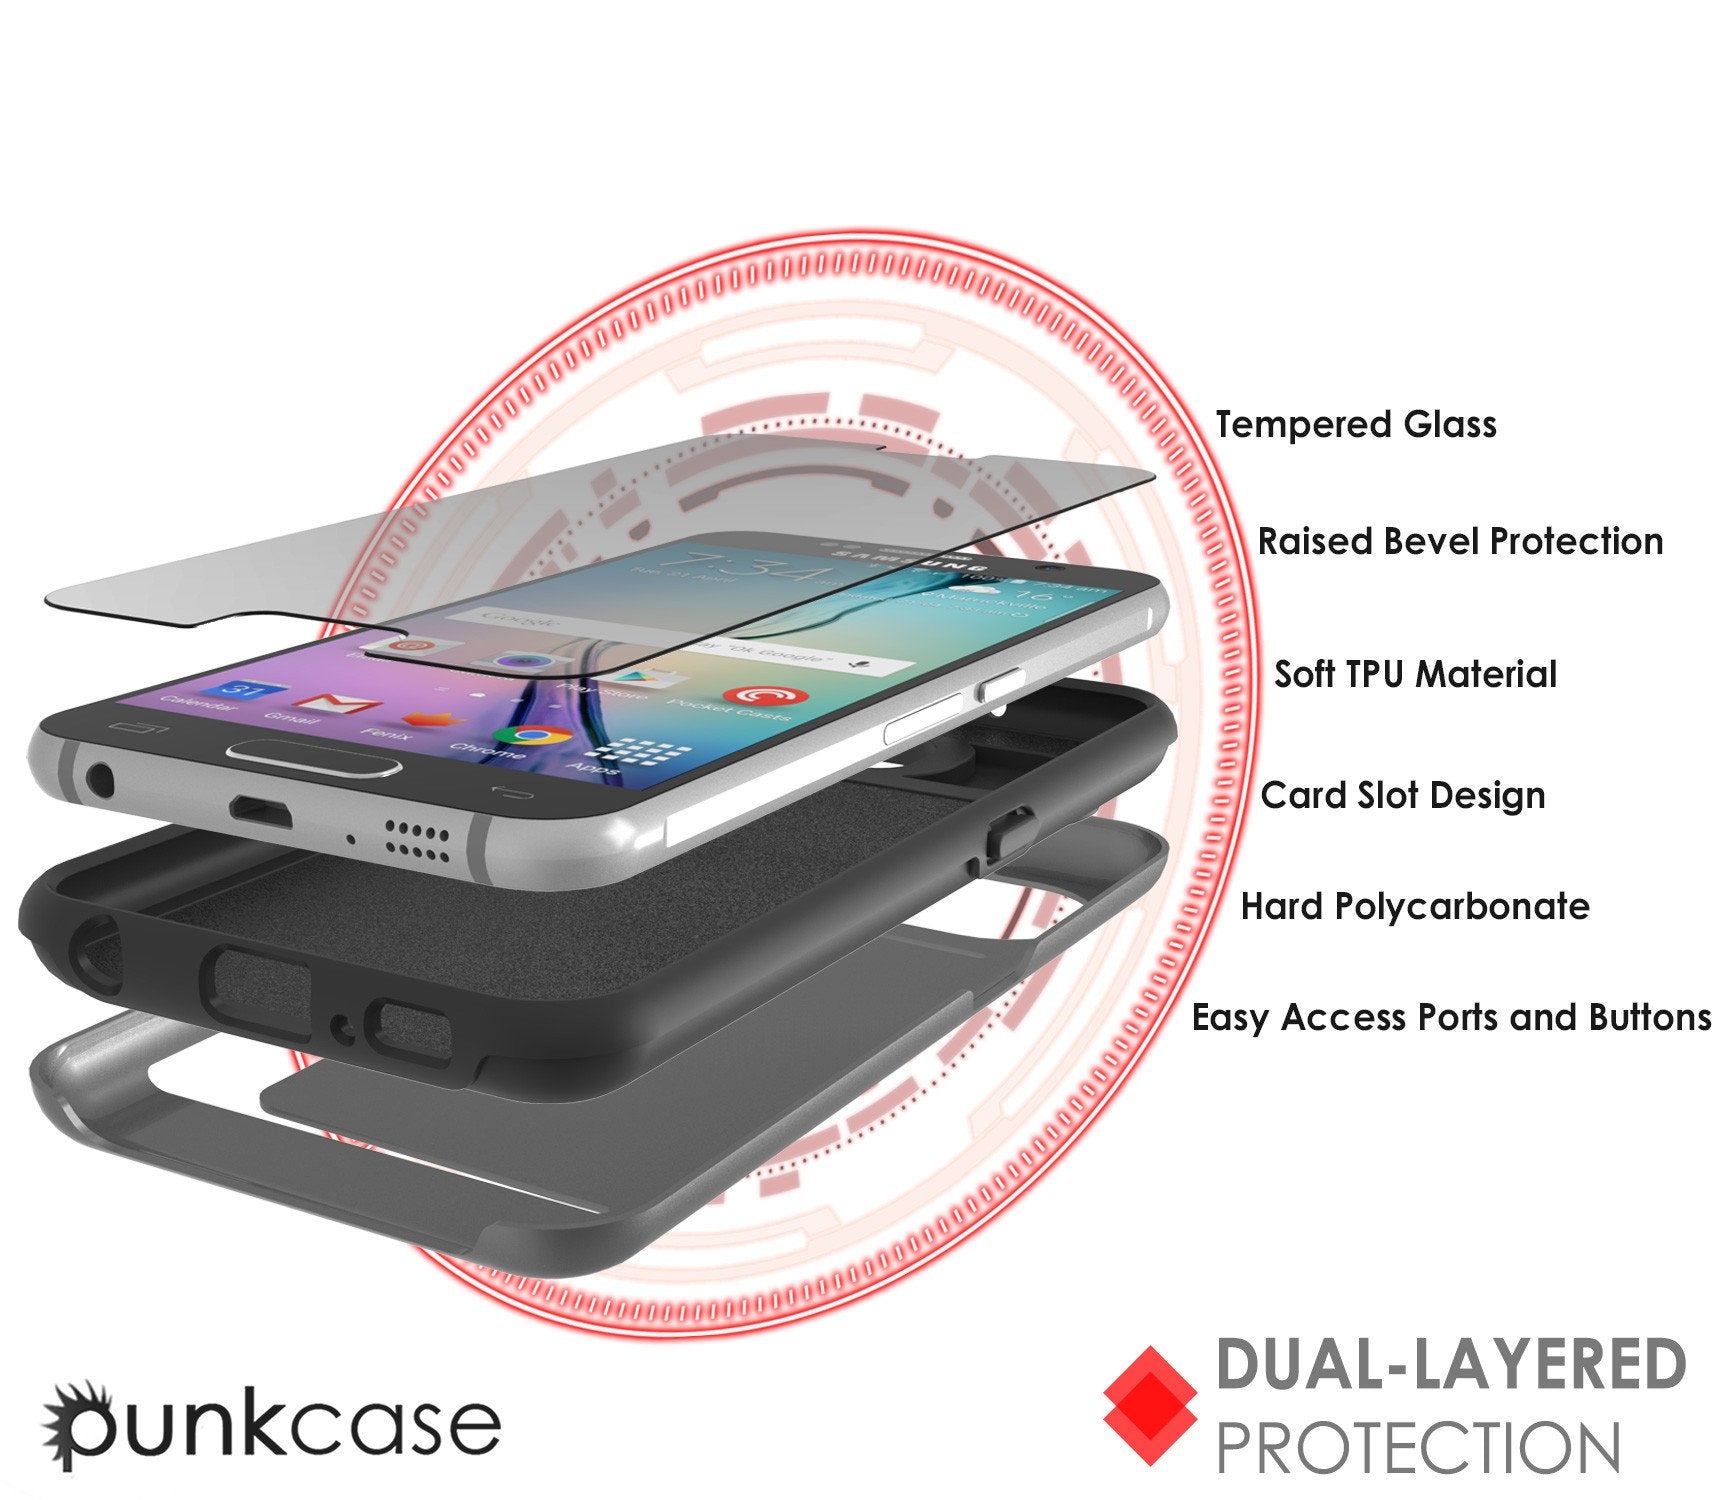 Galaxy S6 EDGE Case PunkCase CLUTCH Grey Series Slim Armor Soft Cover Case w/ Screen Protector